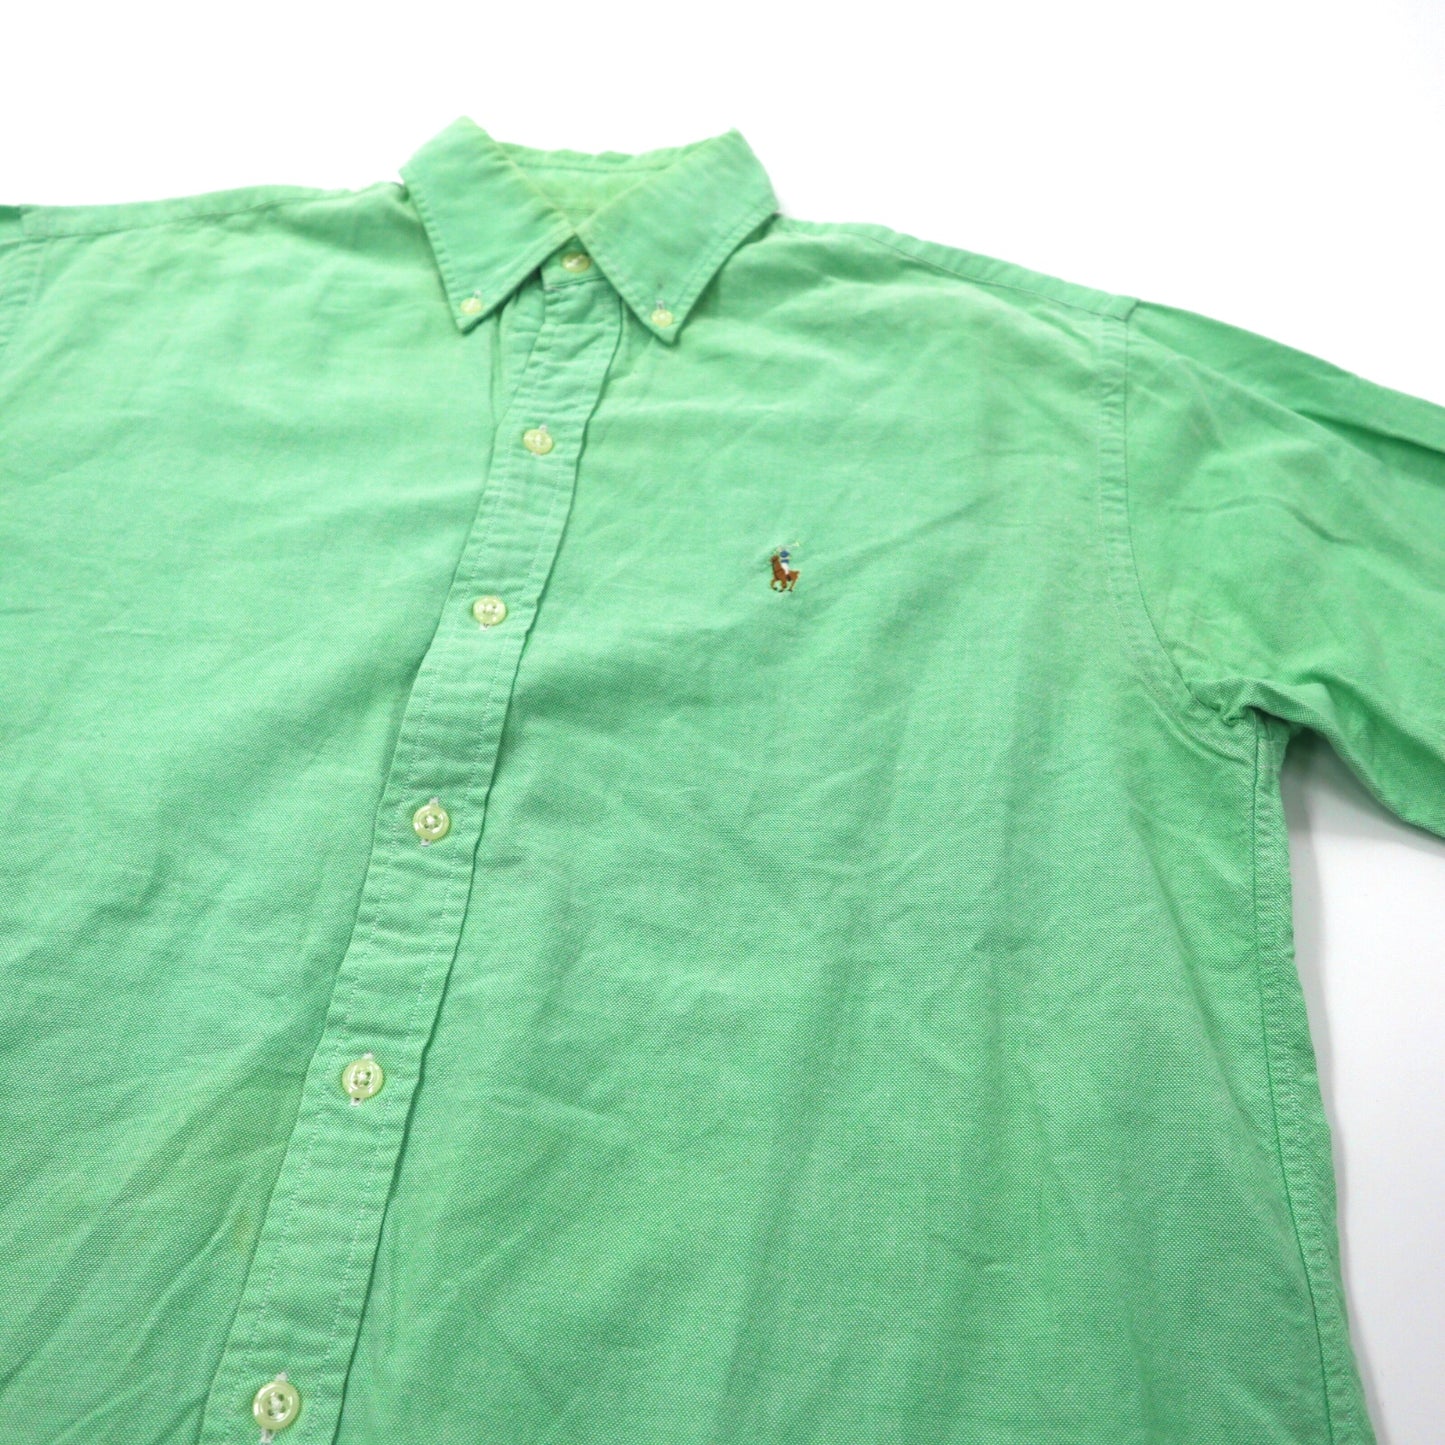 RALPH LAUREN ボタンダウンシャツ 8 グリーン コットン スモールポニー刺繍